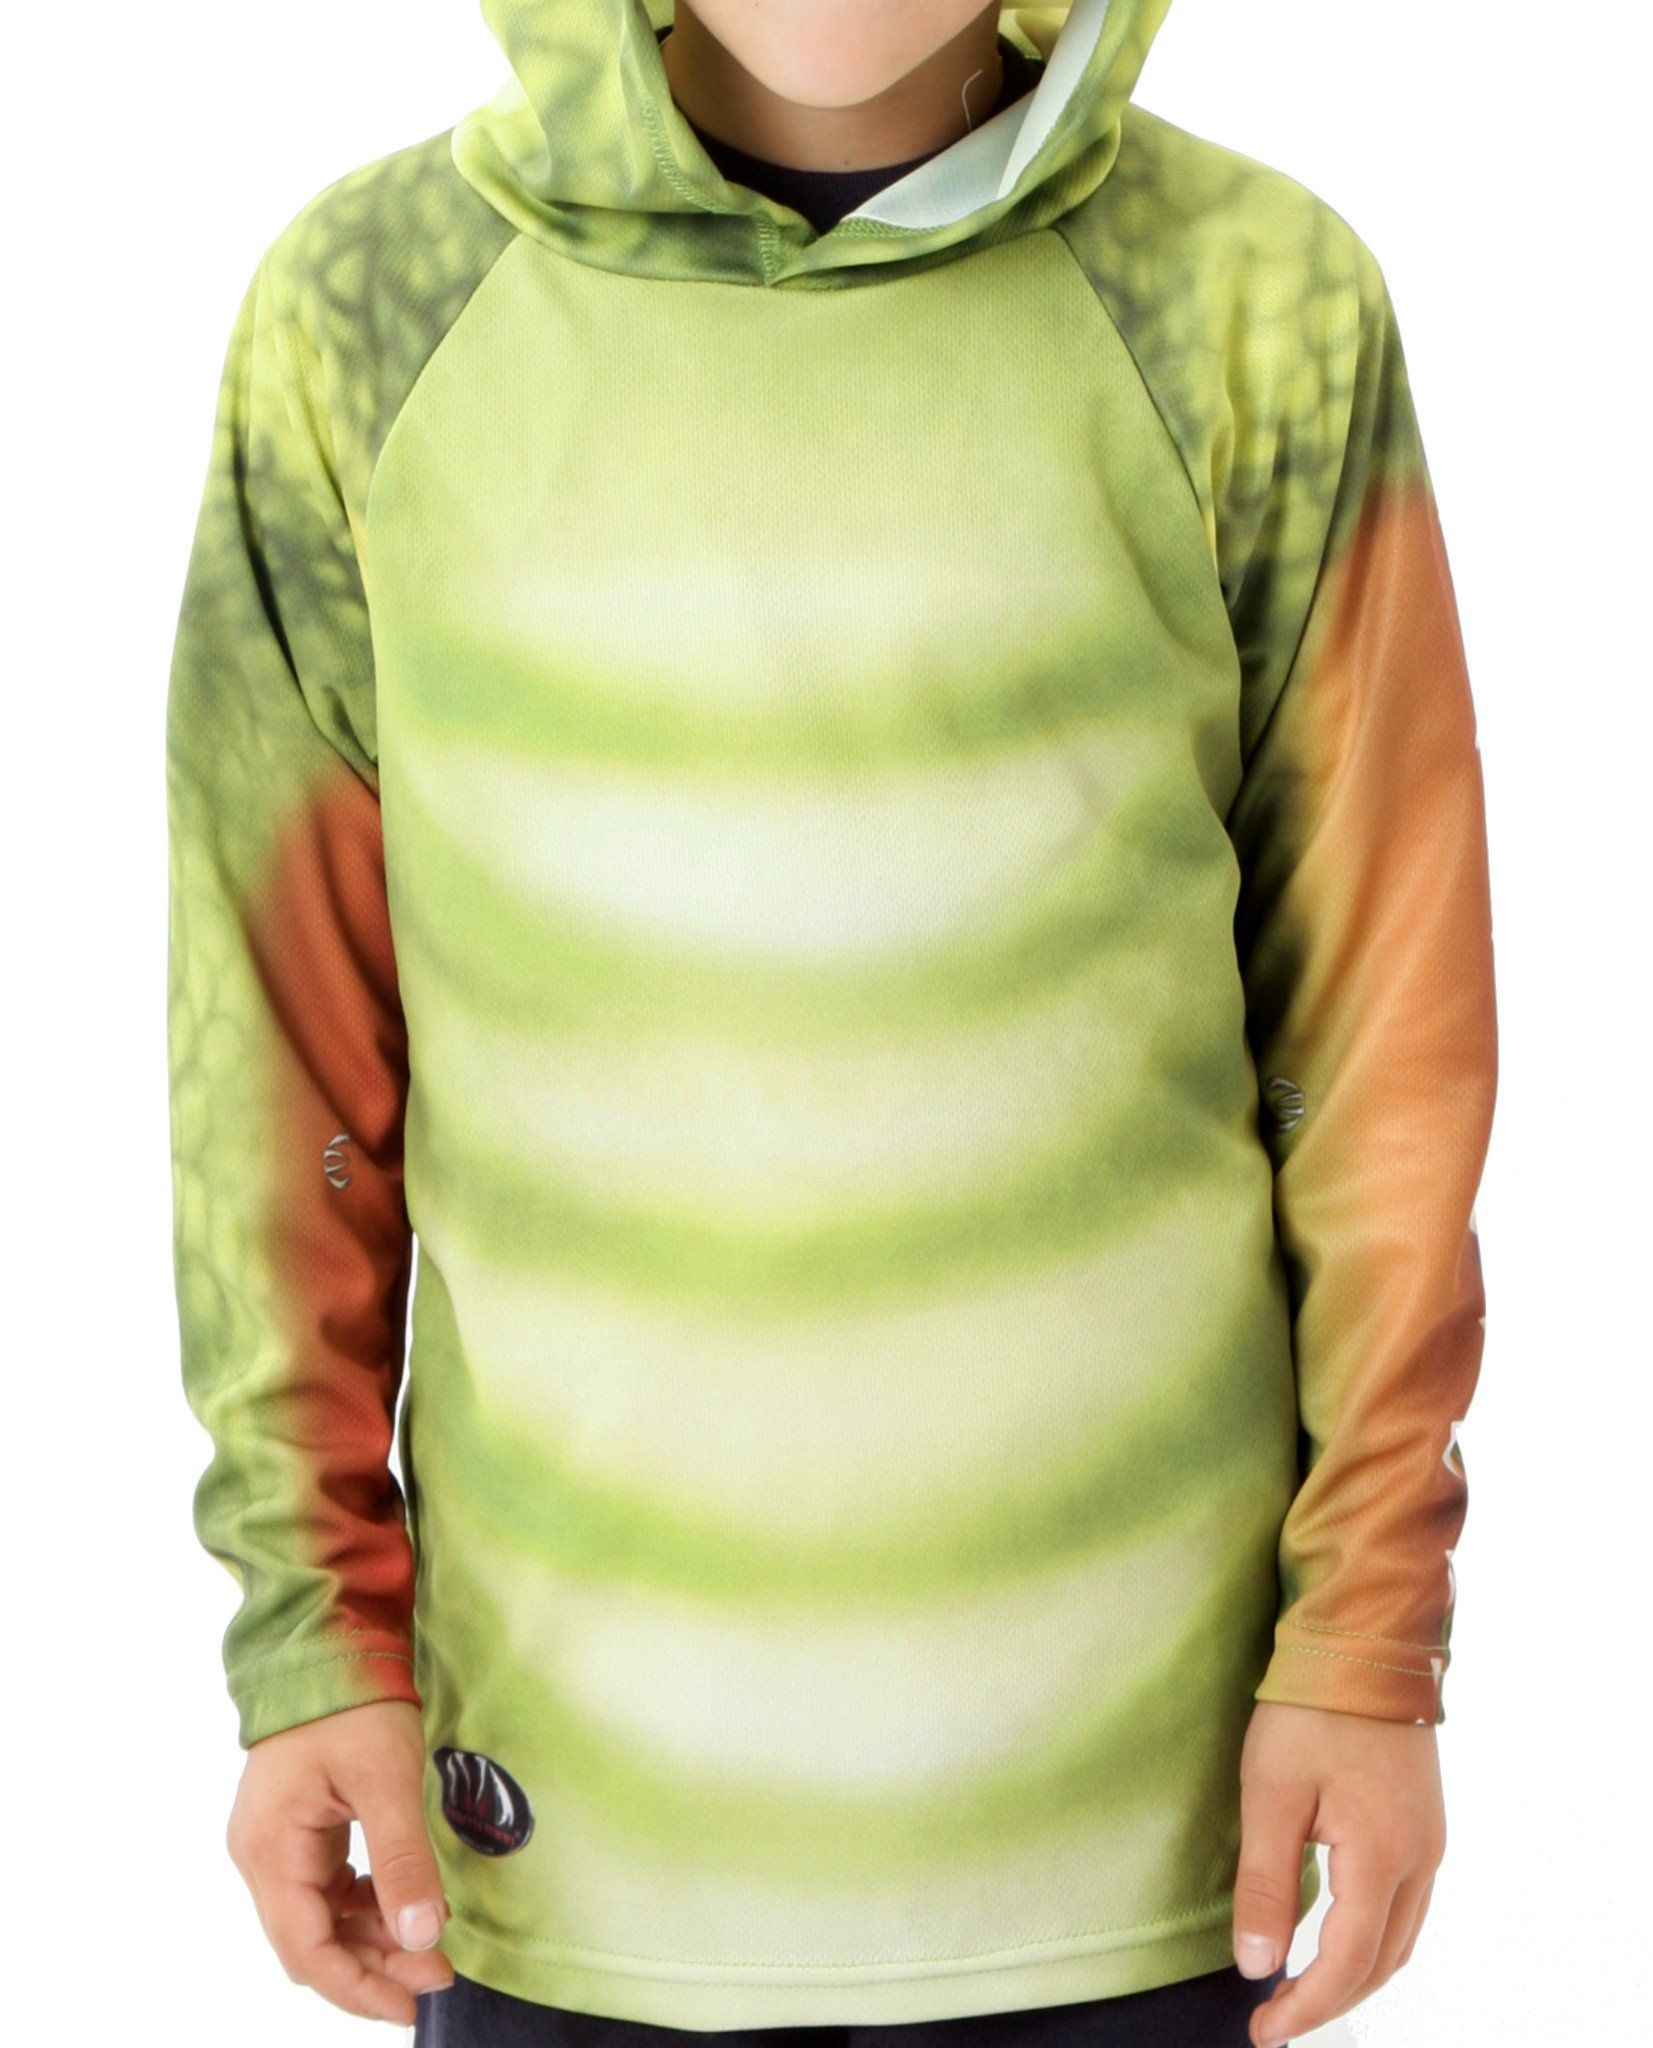 ALLIGATOR Hoodie Chomp Shirt by MOUTHMAN® Kid's Clothing 